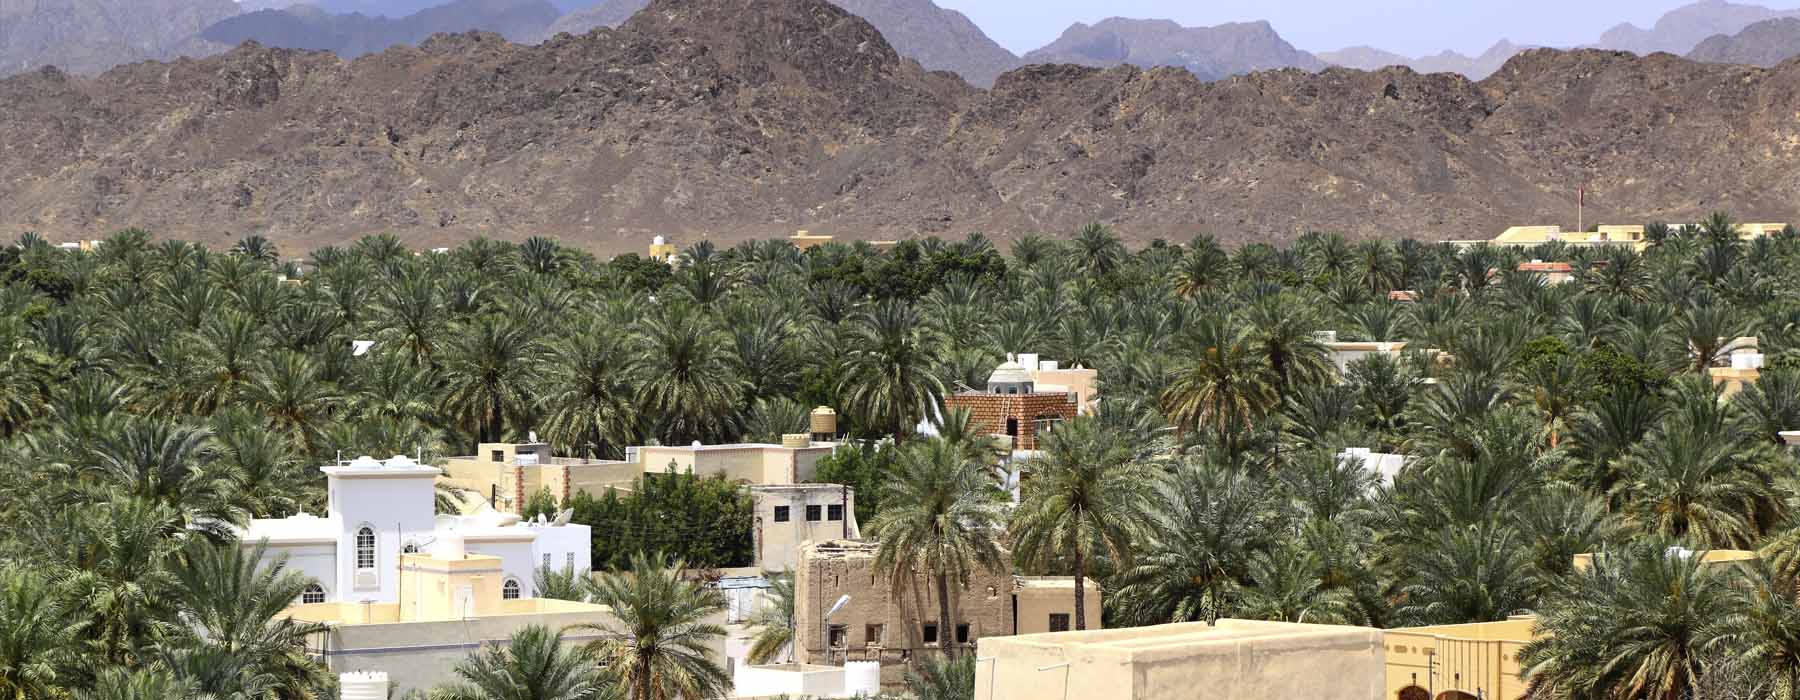 All our Oman Itinerary<br class="hidden-md hidden-lg" /> holidays